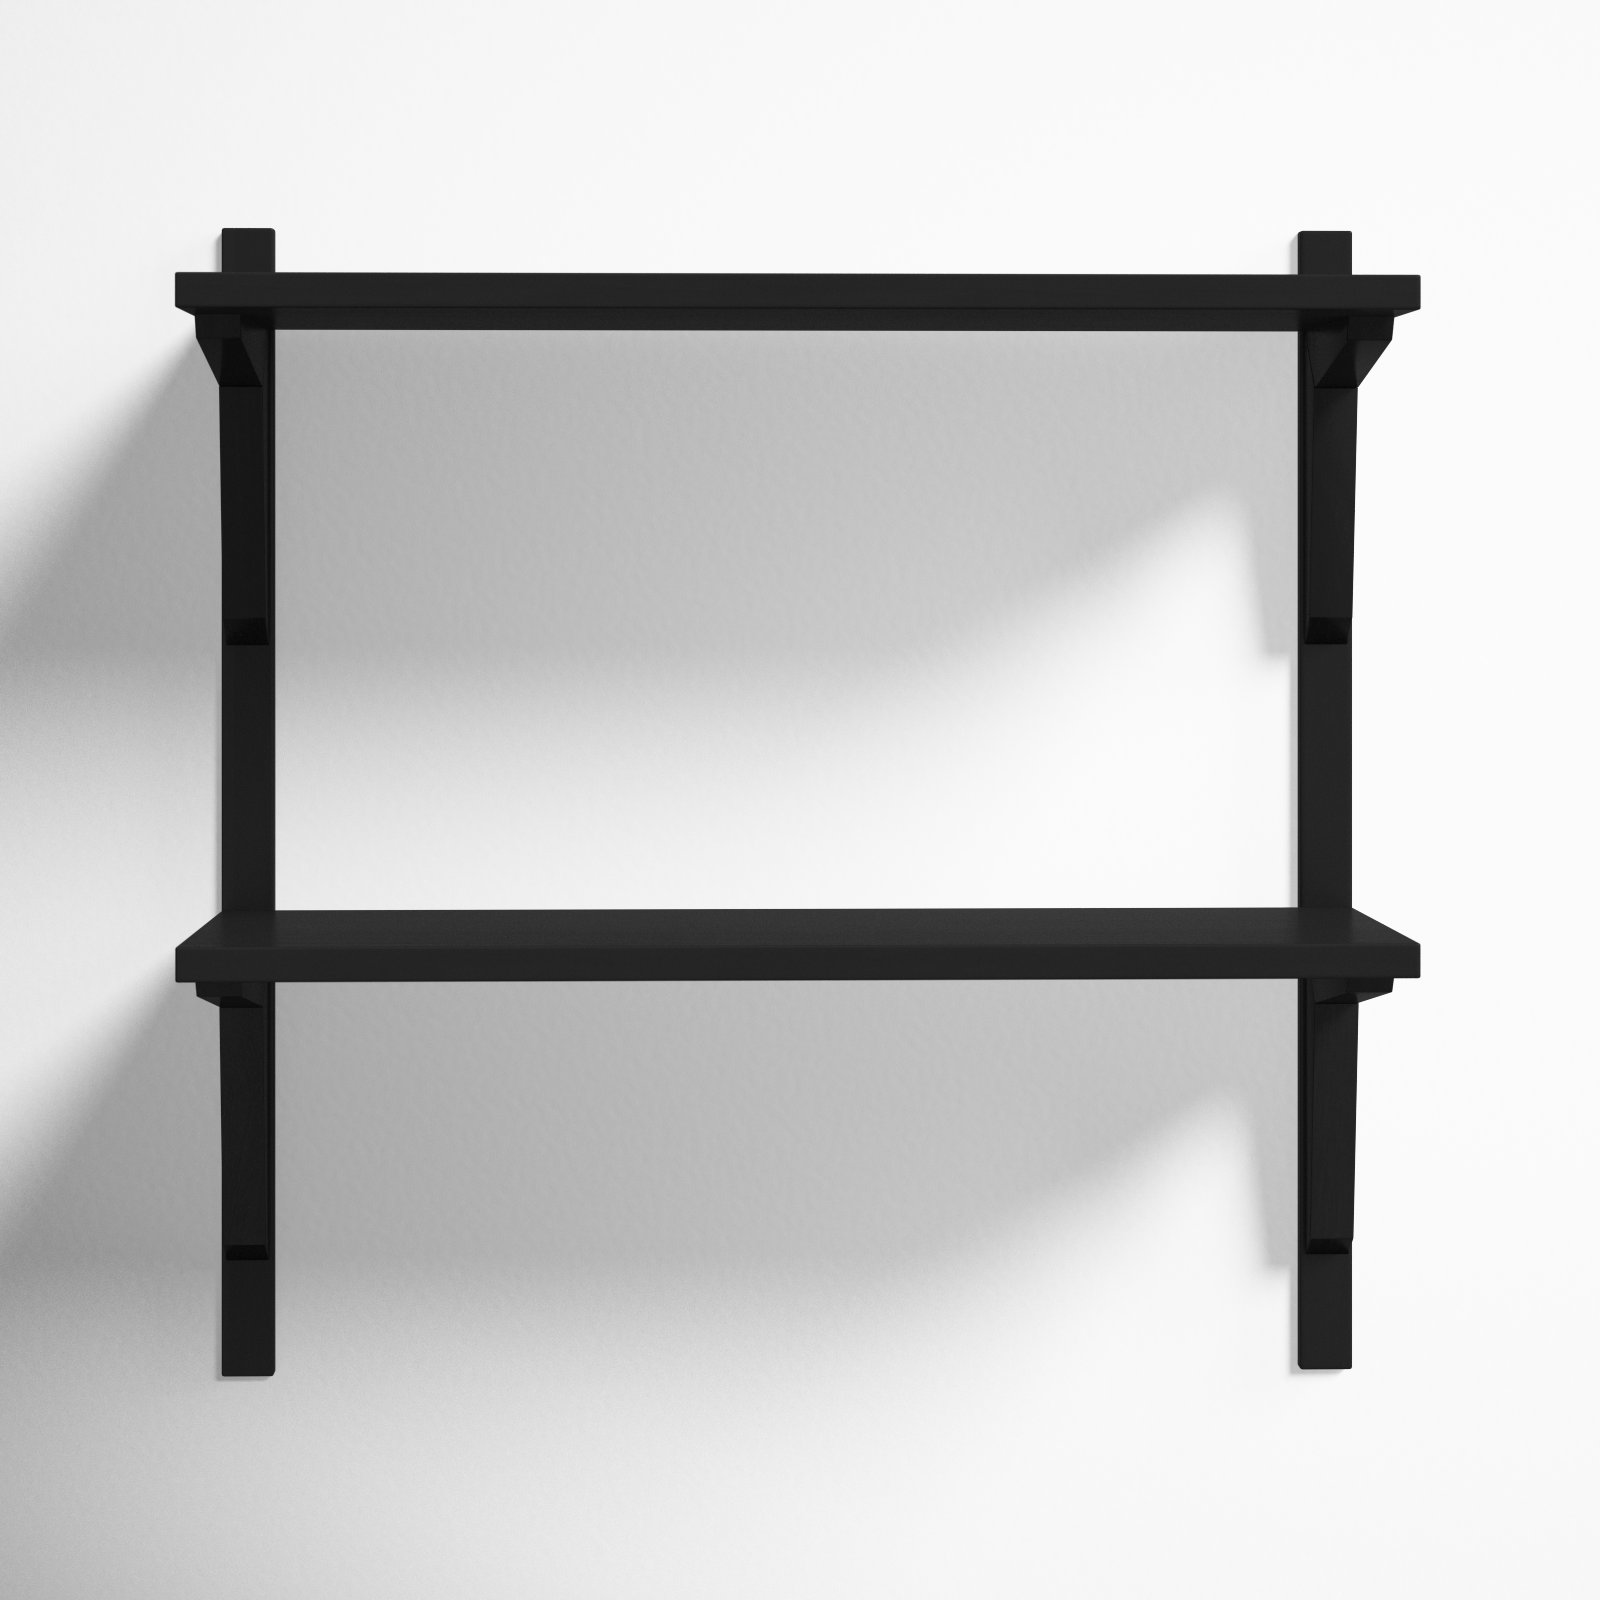 Baez Poplar Solid Wood Wall Shelf AllModern Finish: Black